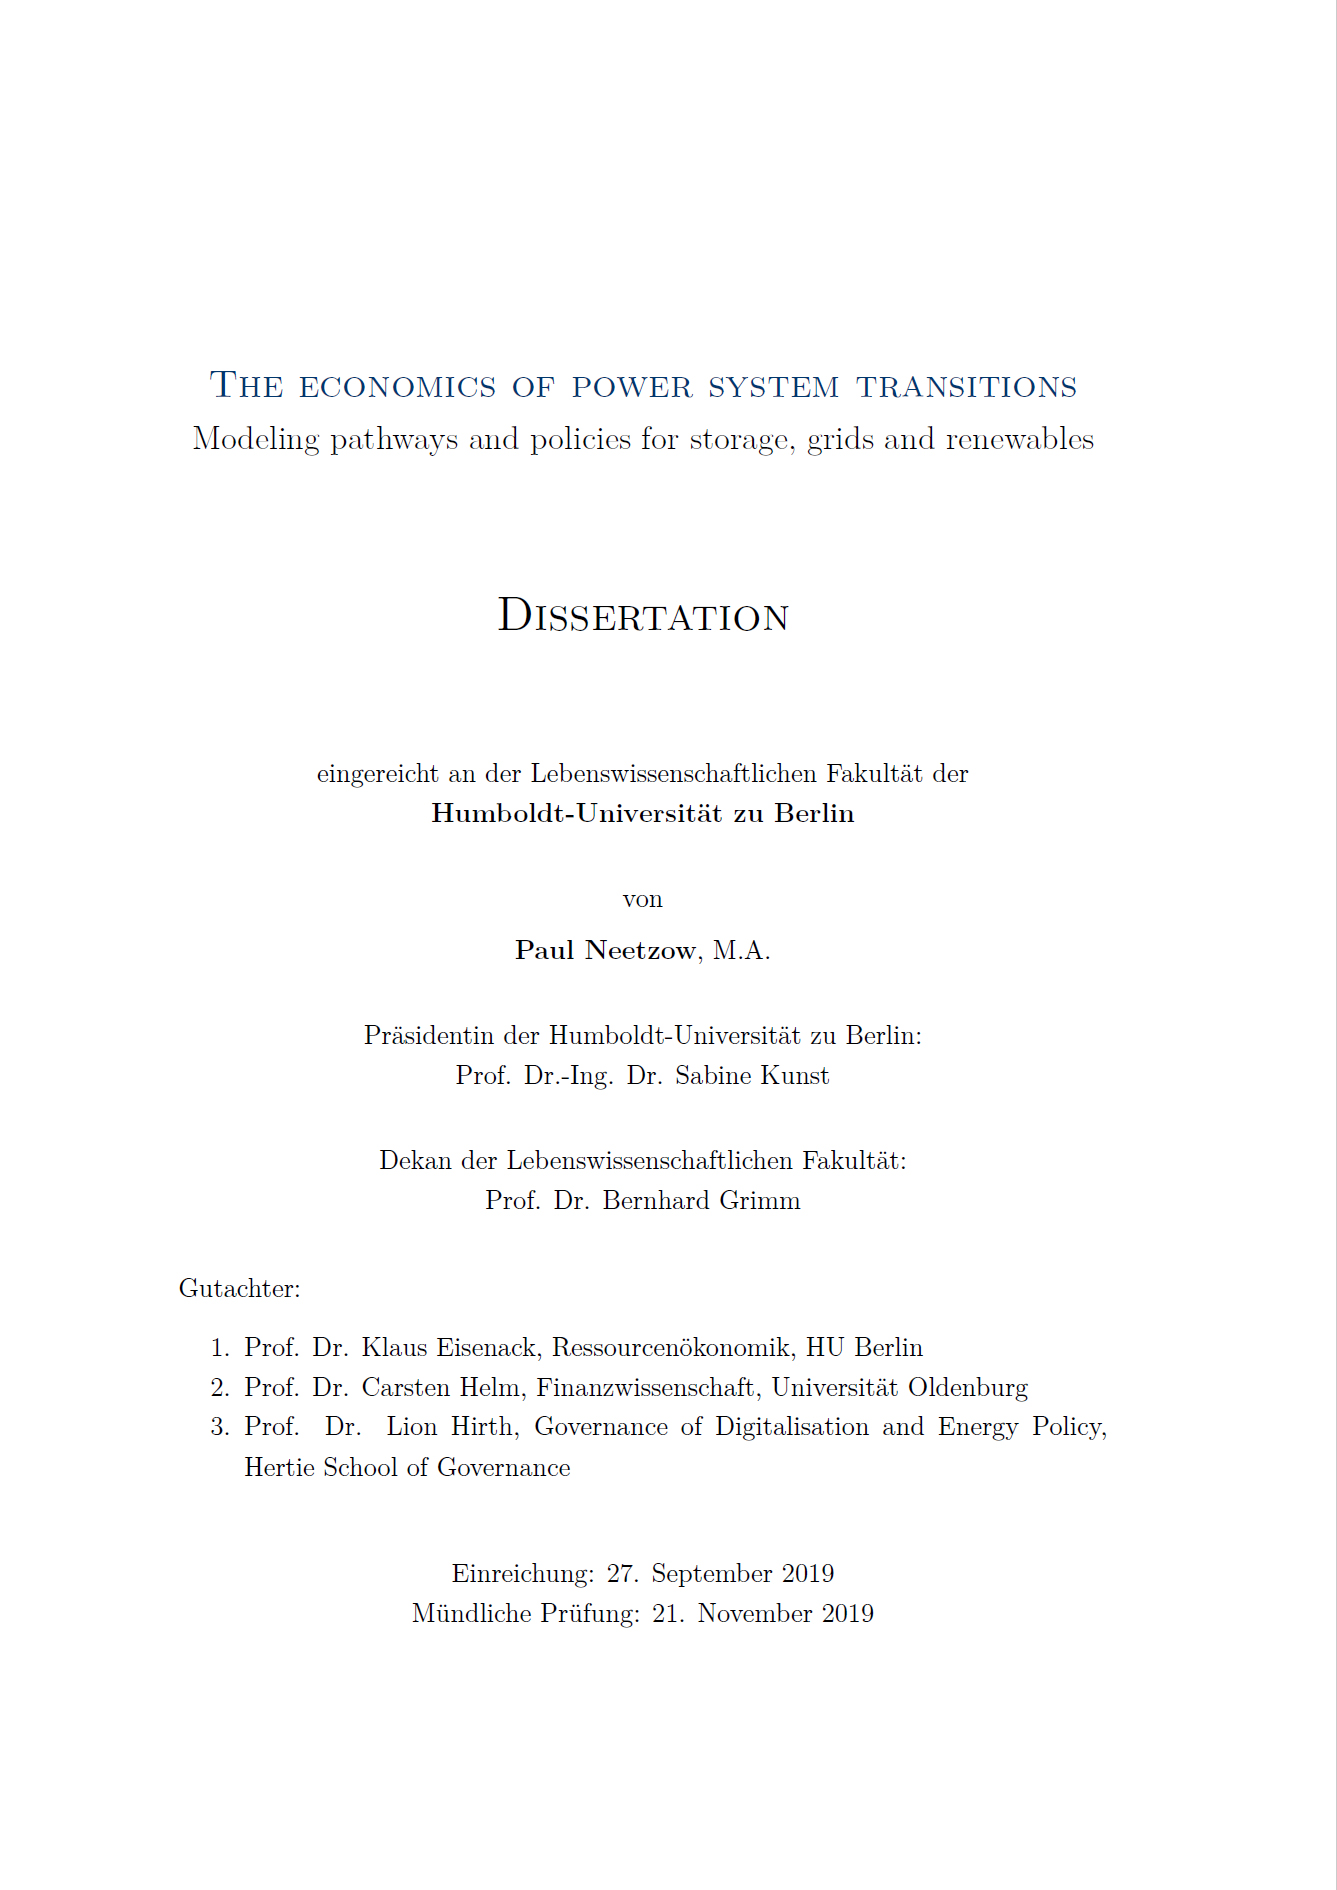 Dissertation-Paul_Neetzow.pdf